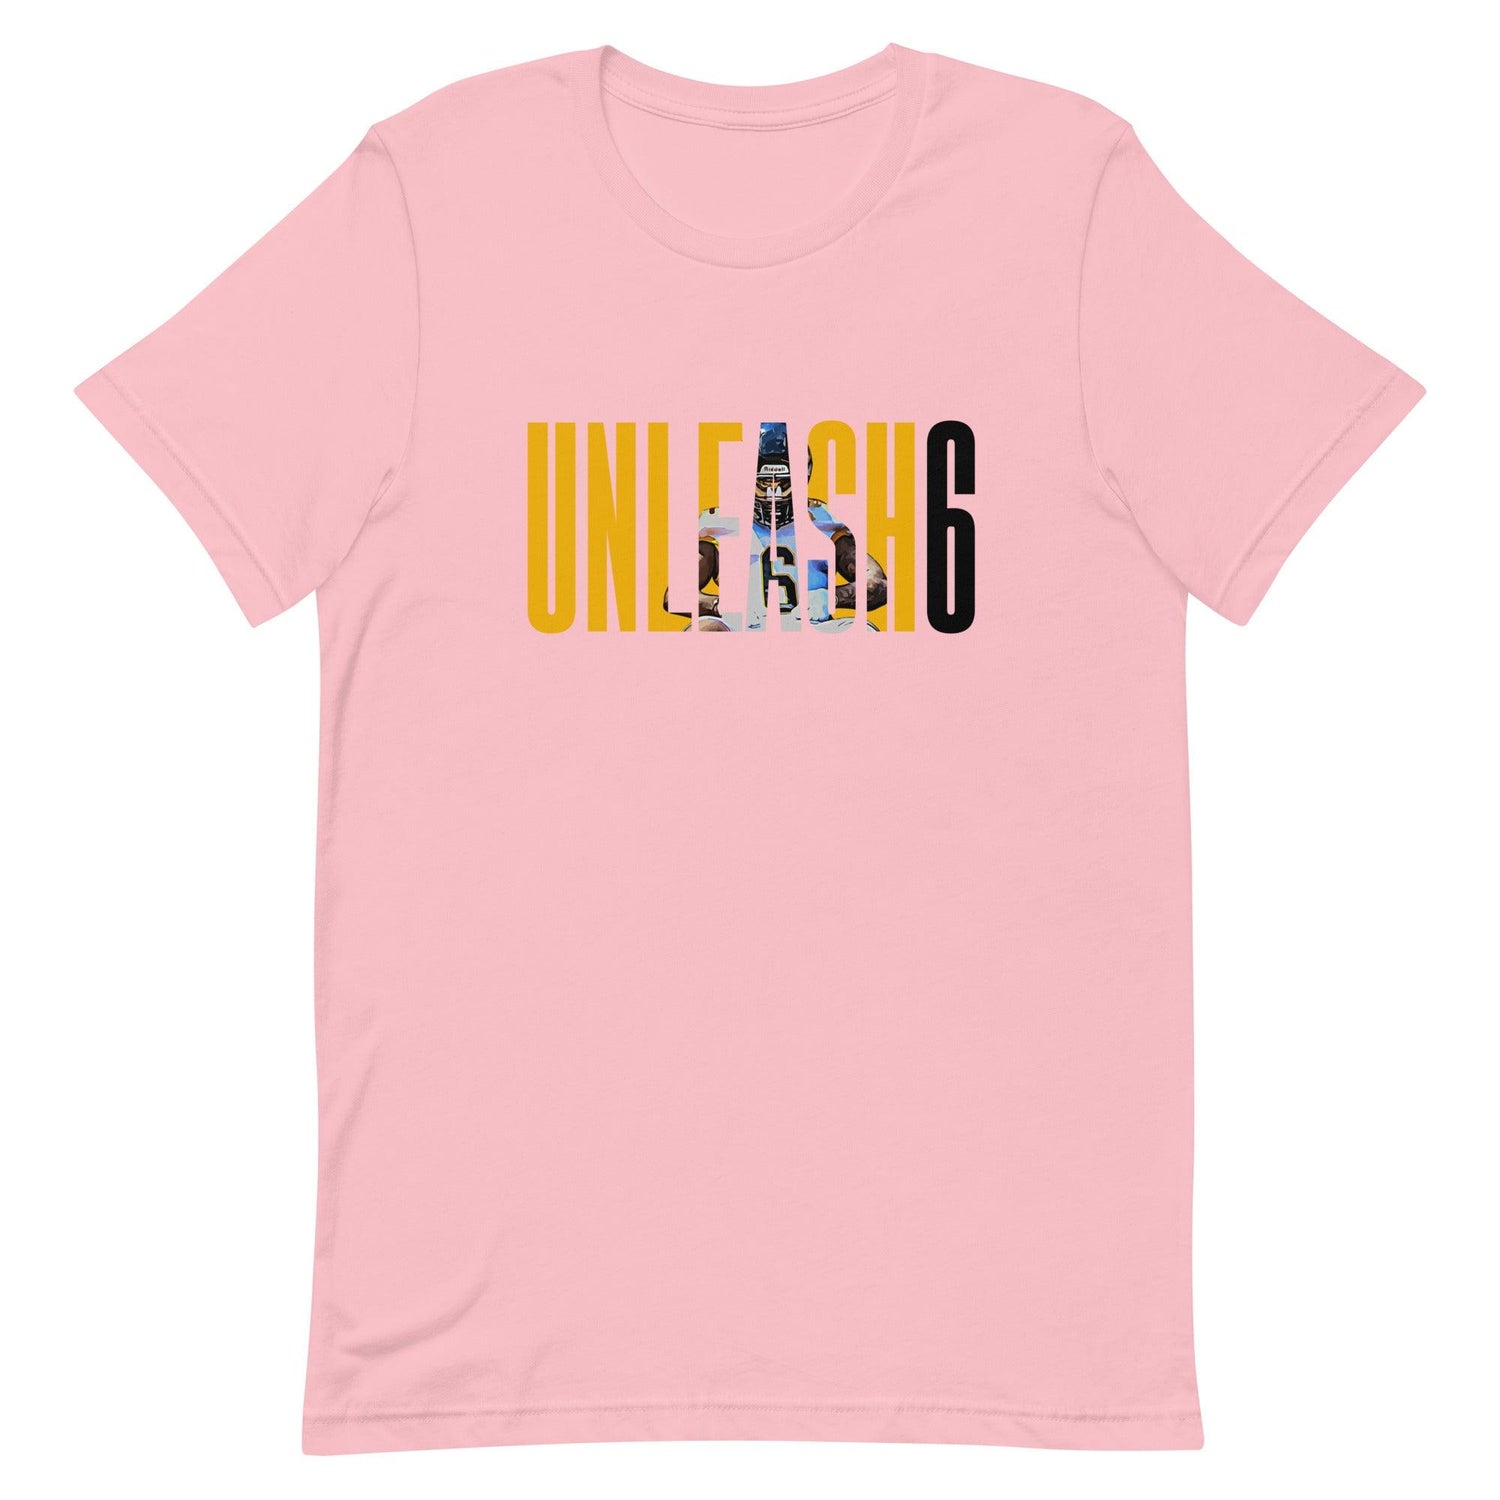 Dajon Richard "Unleash6" t-shirt - Fan Arch